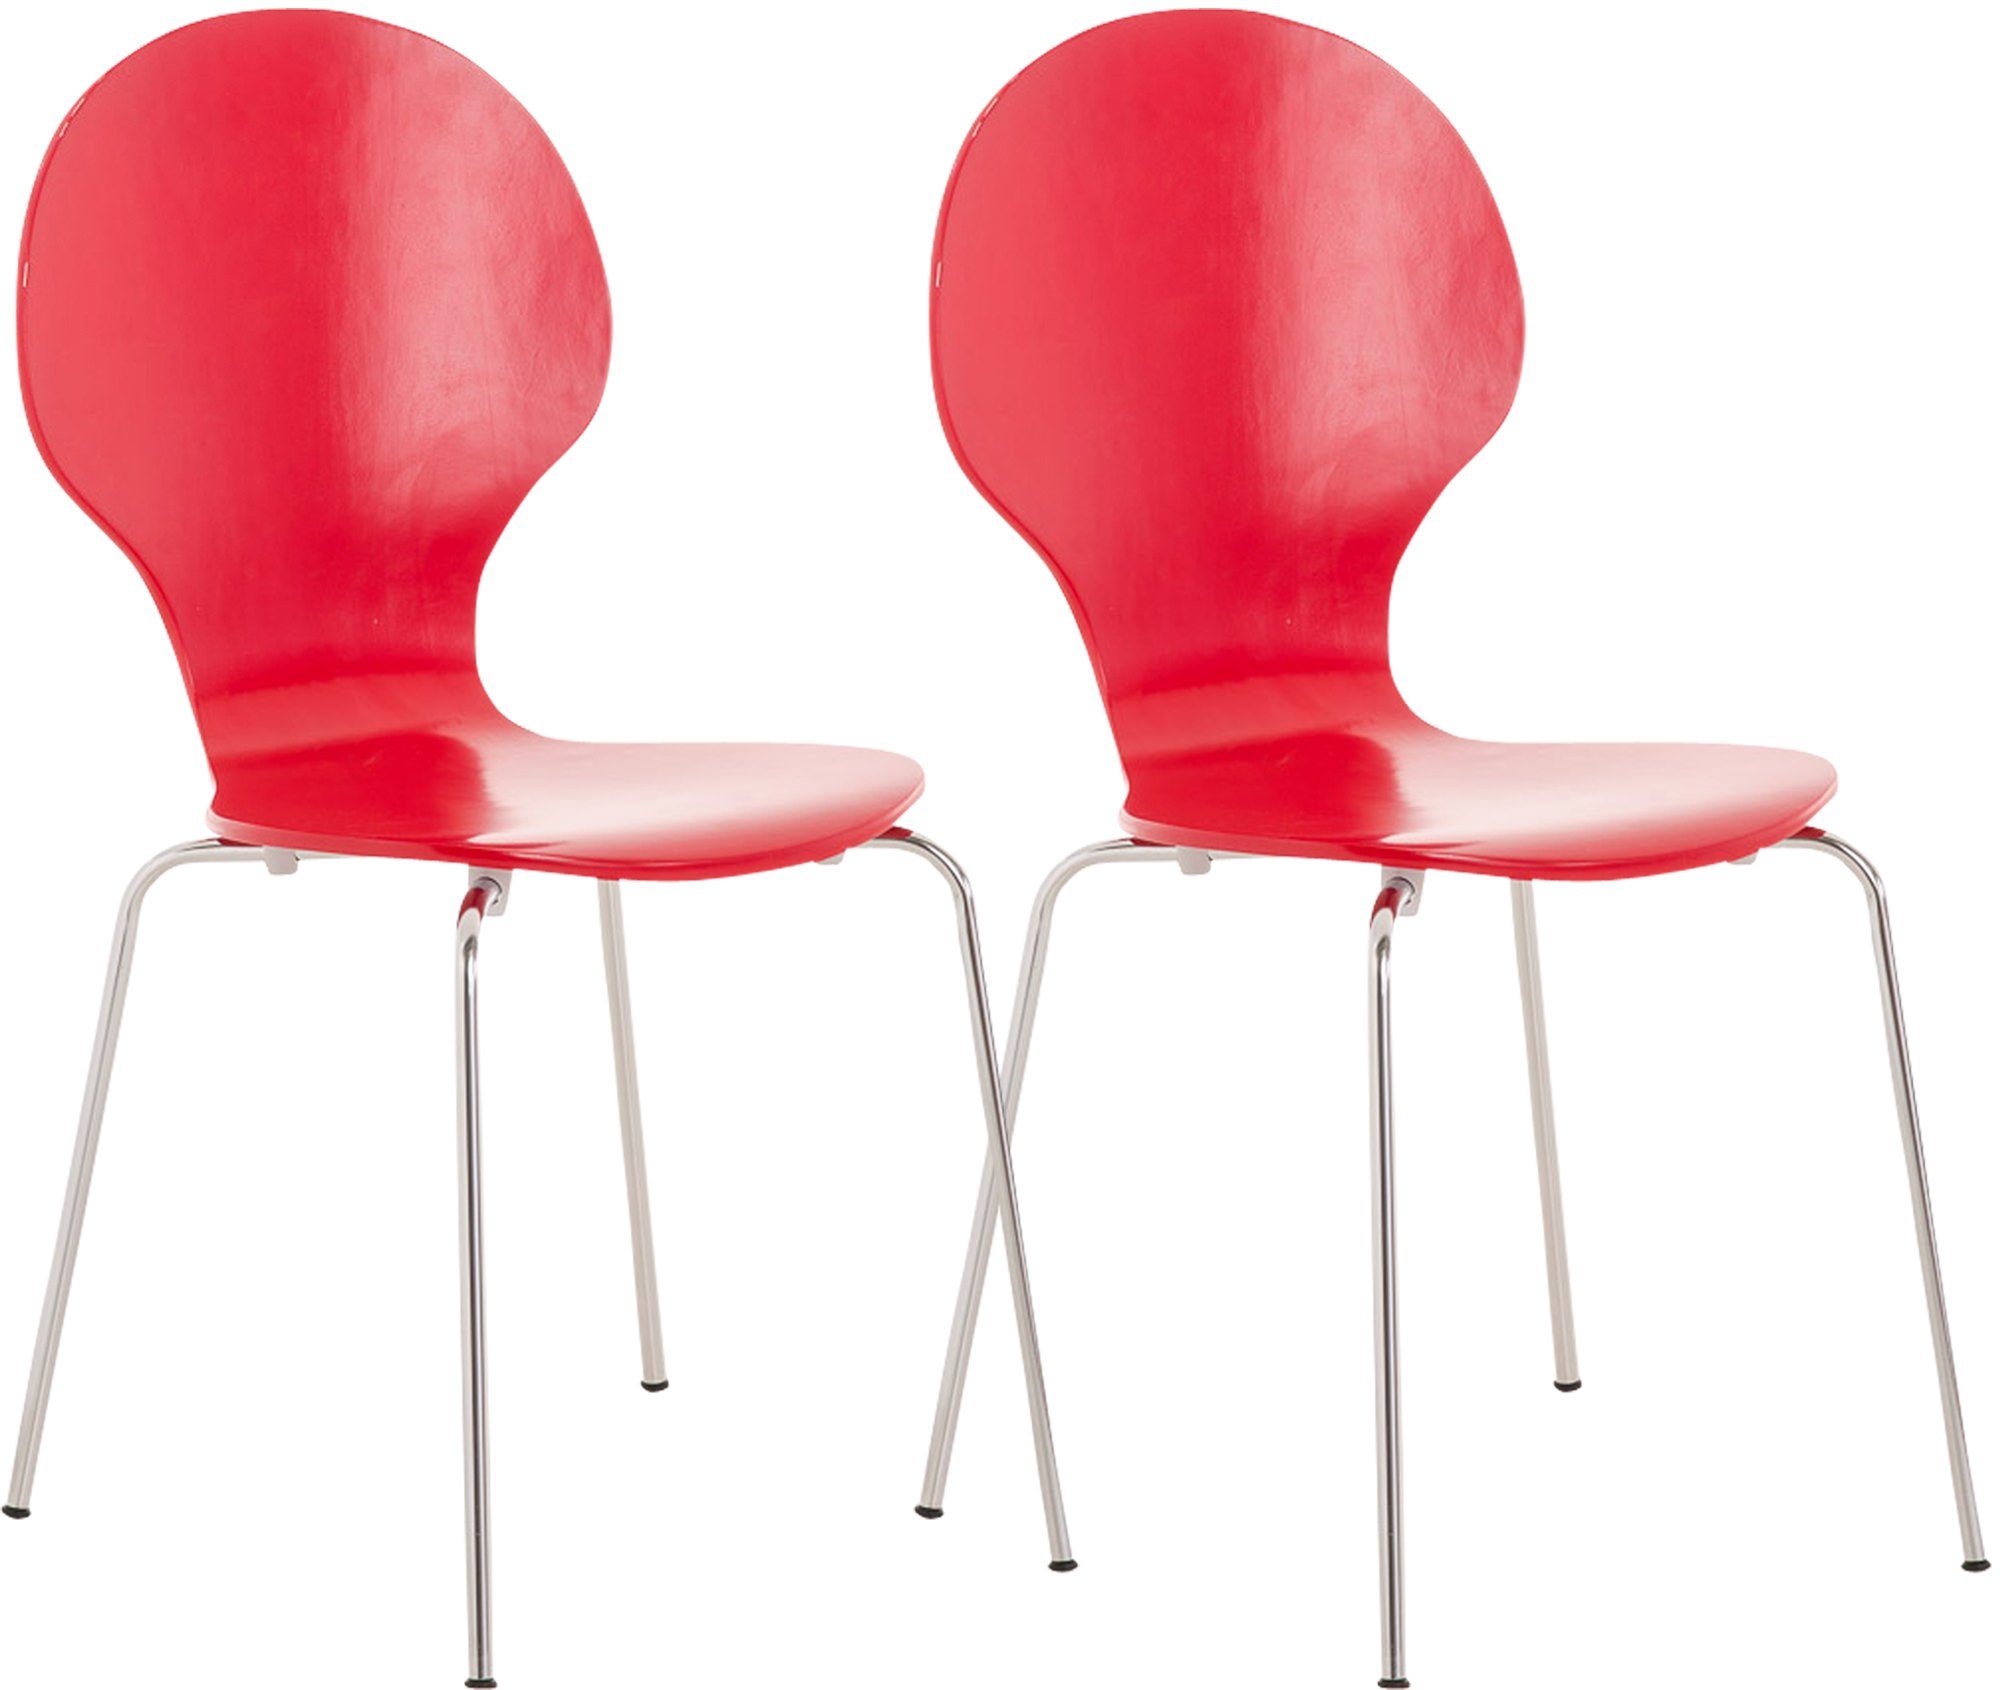 (Besprechungsstuhl Konferenzstuhl - Sitzfläche: ergonomisch Daggy St), mit rot - Besucherstuhl Gestell: TPFLiving Messestuhl, 2 Warteraumstuhl geformter Holz chrom - - Sitzfläche Metall